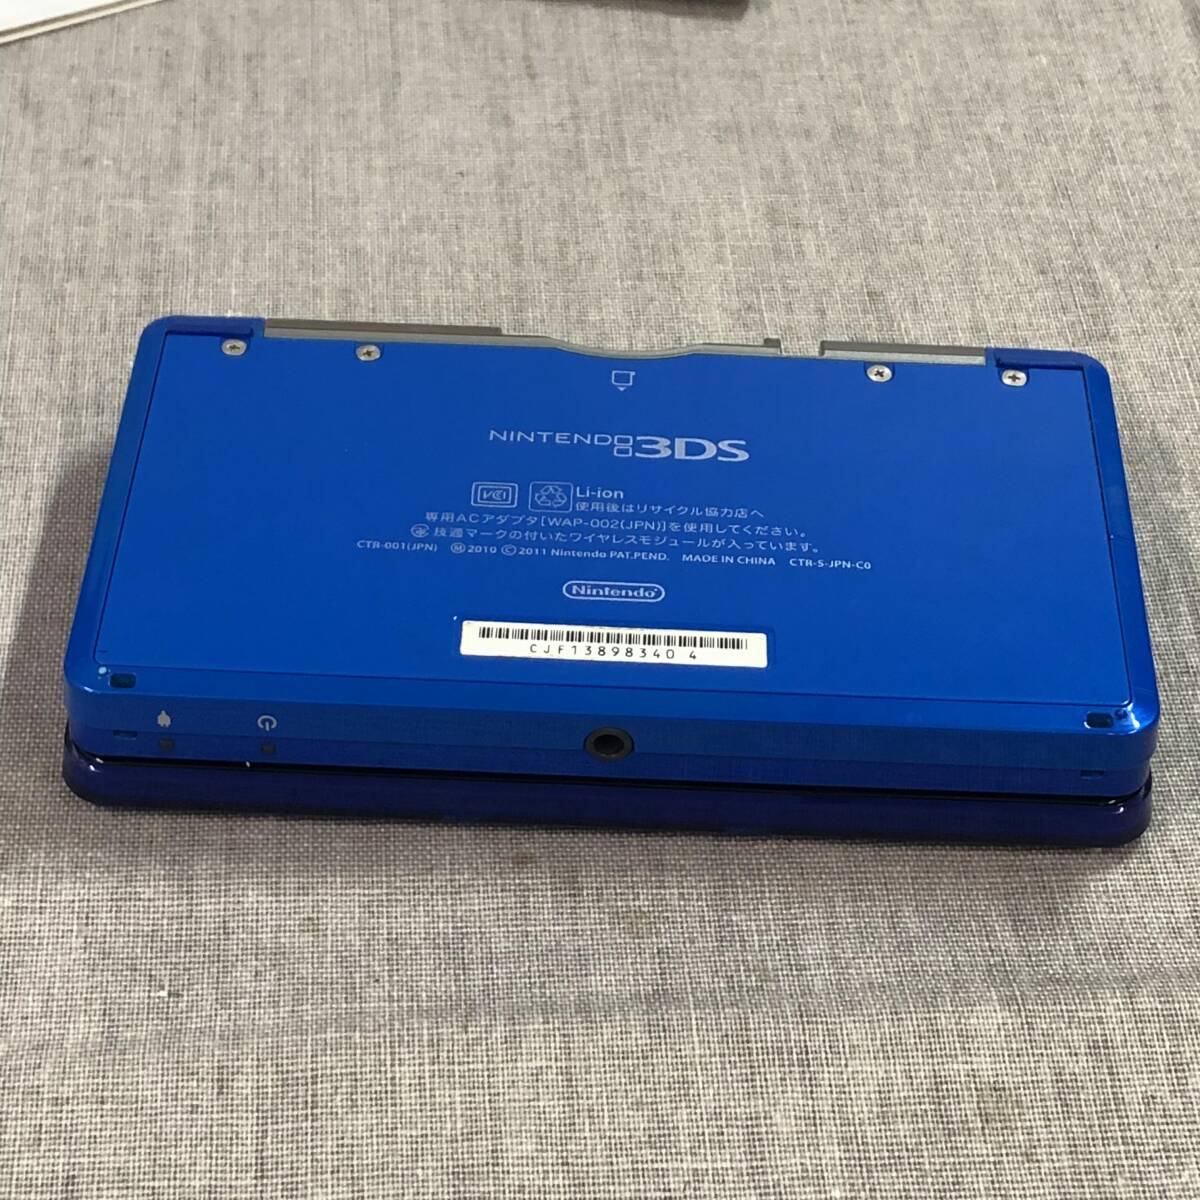  Nintendo 3DS кобальт голубой 